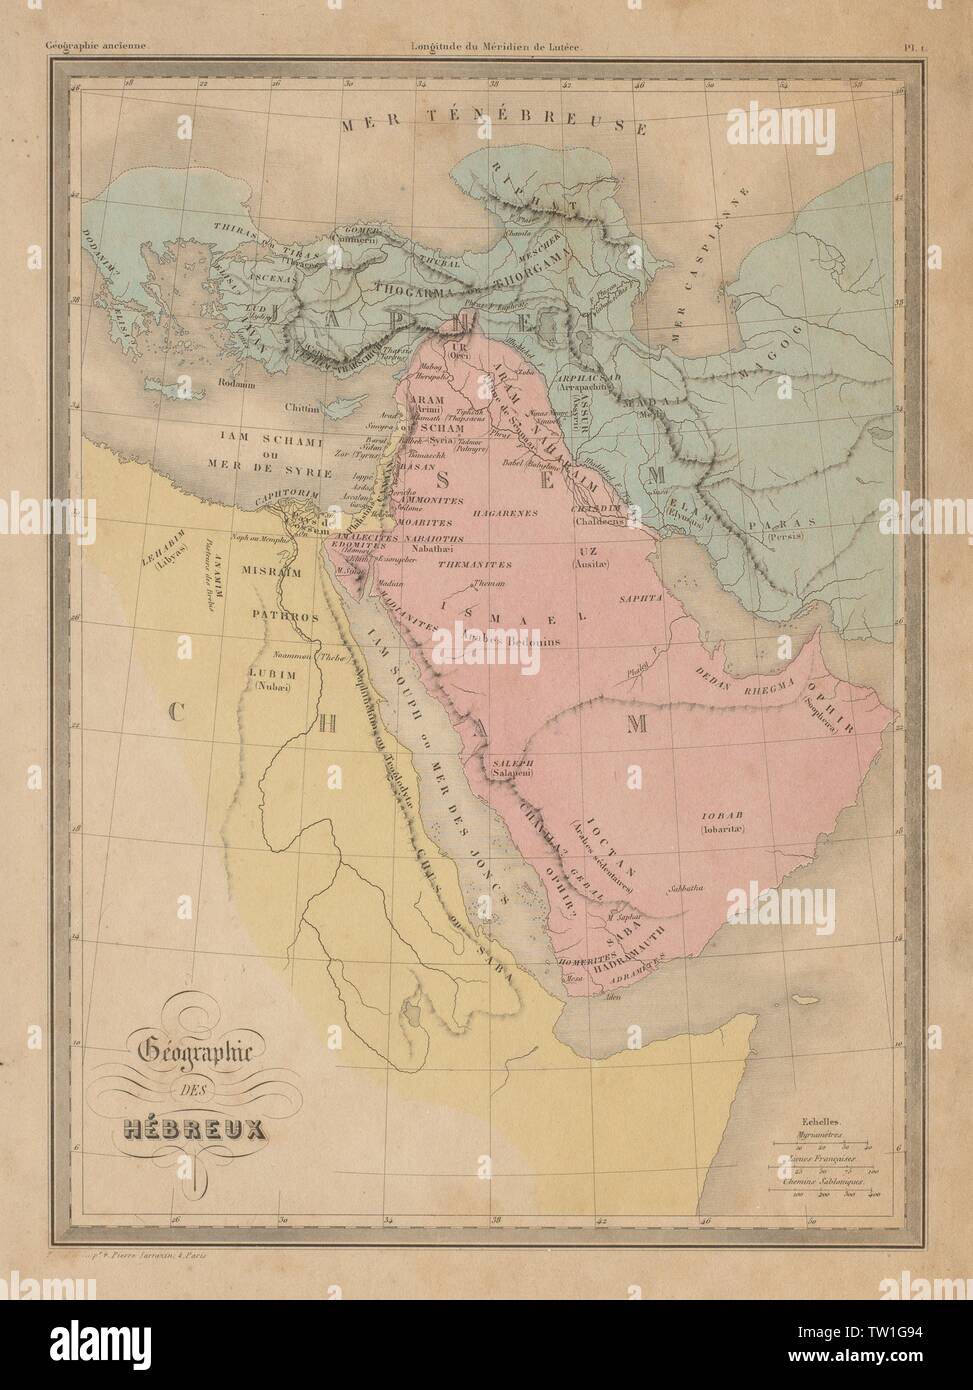 Géographie des Hébreux. World of the Israelites. Arabia. MALTE-BRUN c1871 map Stock Photo